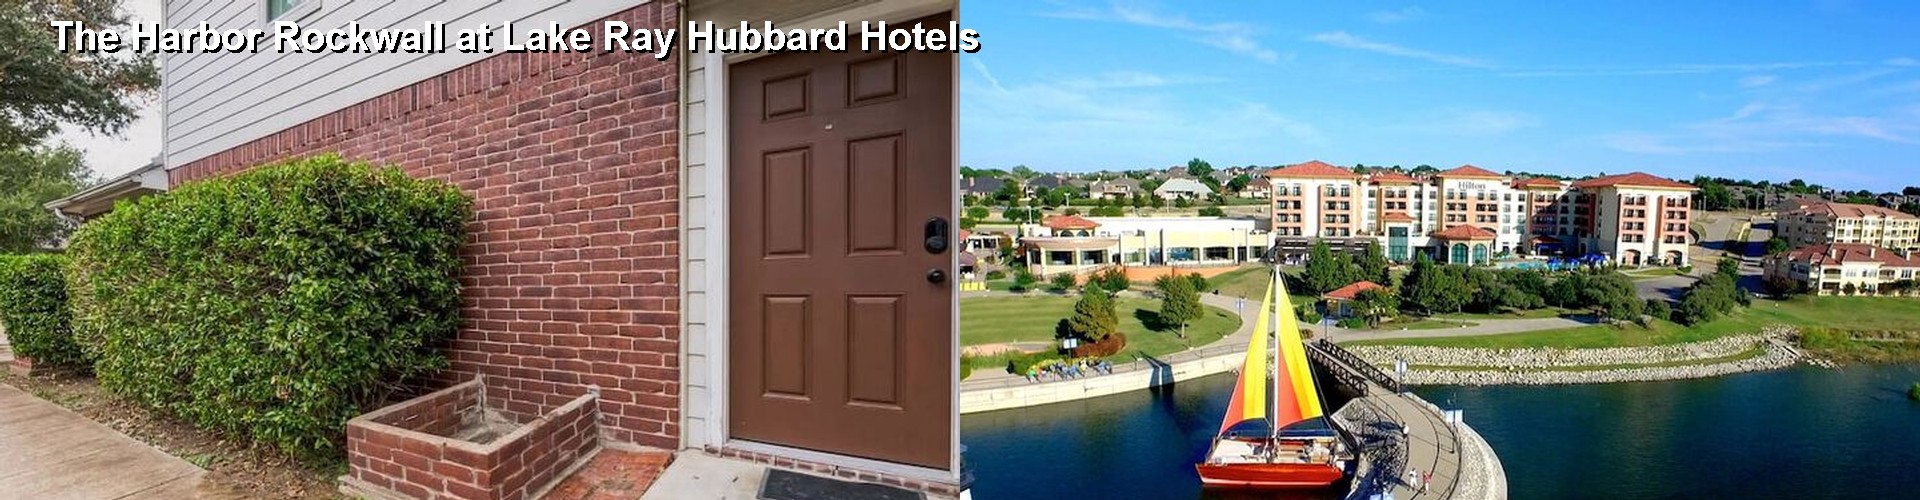 5 Best Hotels near The Harbor Rockwall at Lake Ray Hubbard